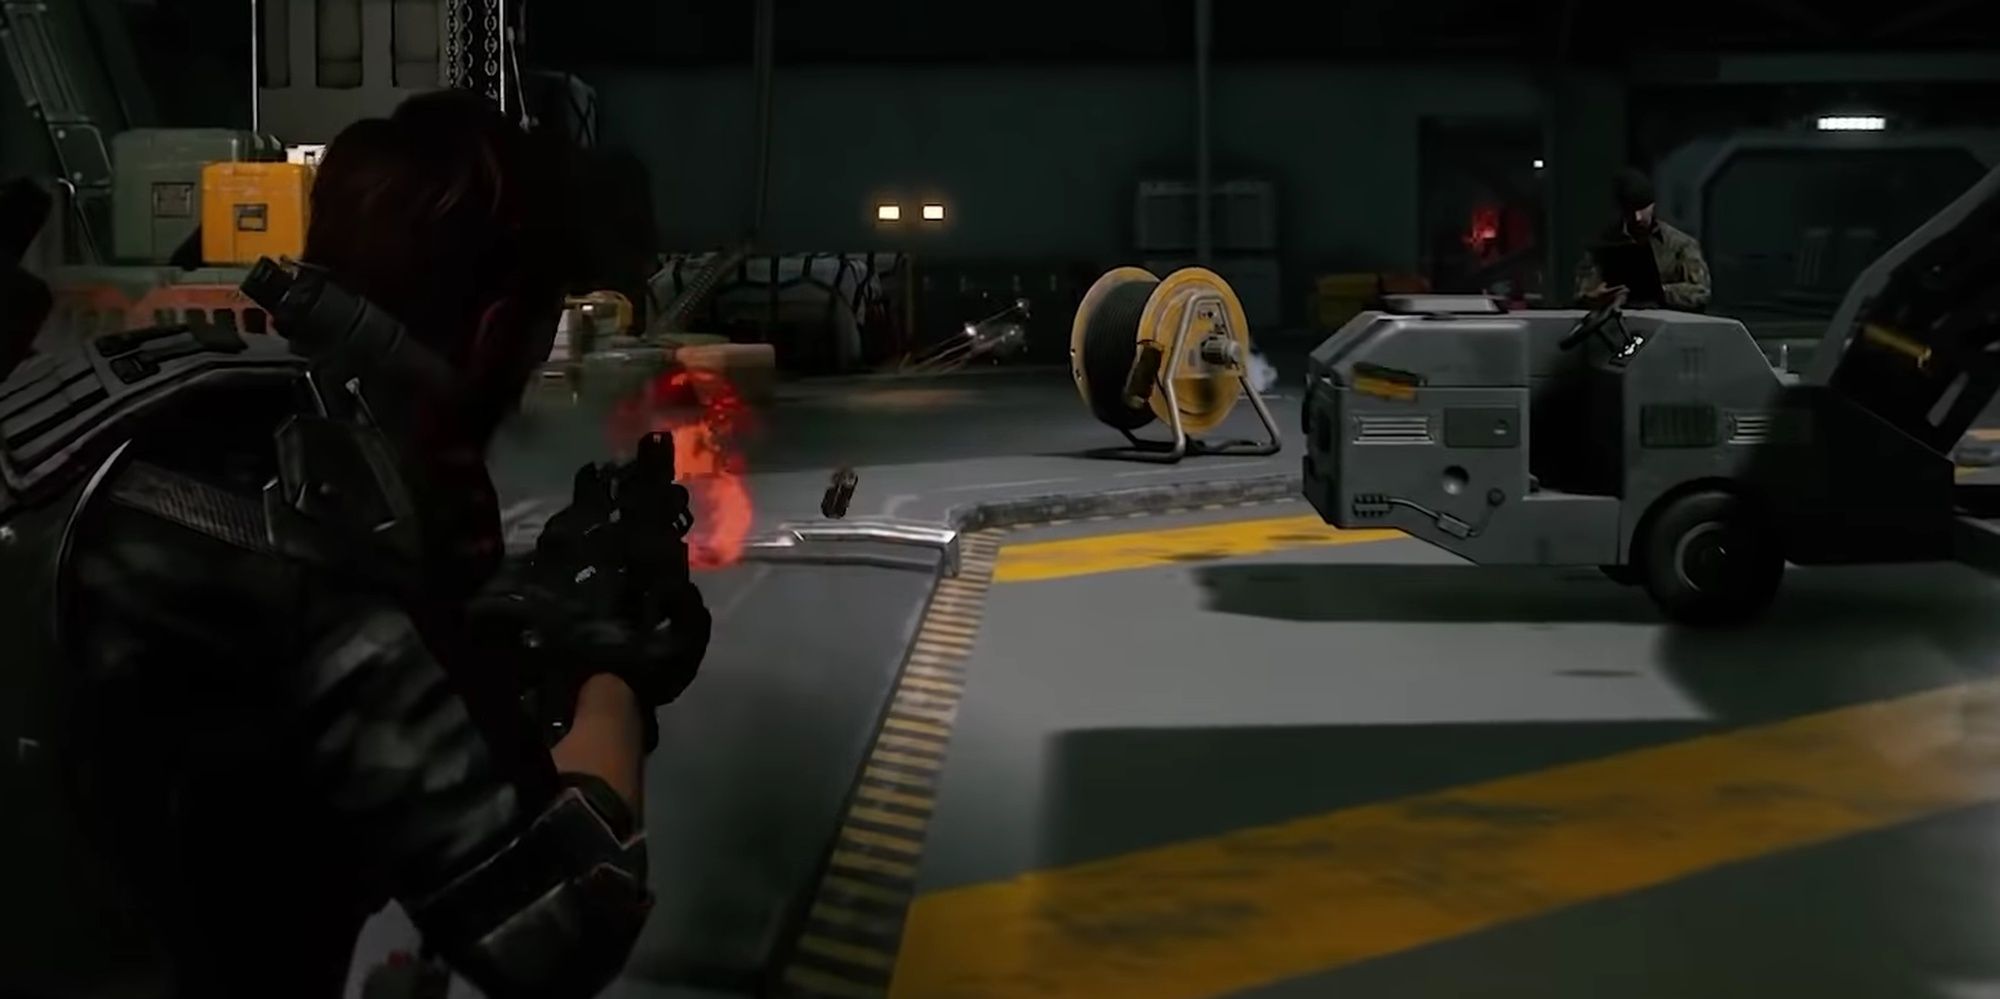 Aliens: Fireteam Elite Recon Class Firing New Submachine Gun Within Hangar